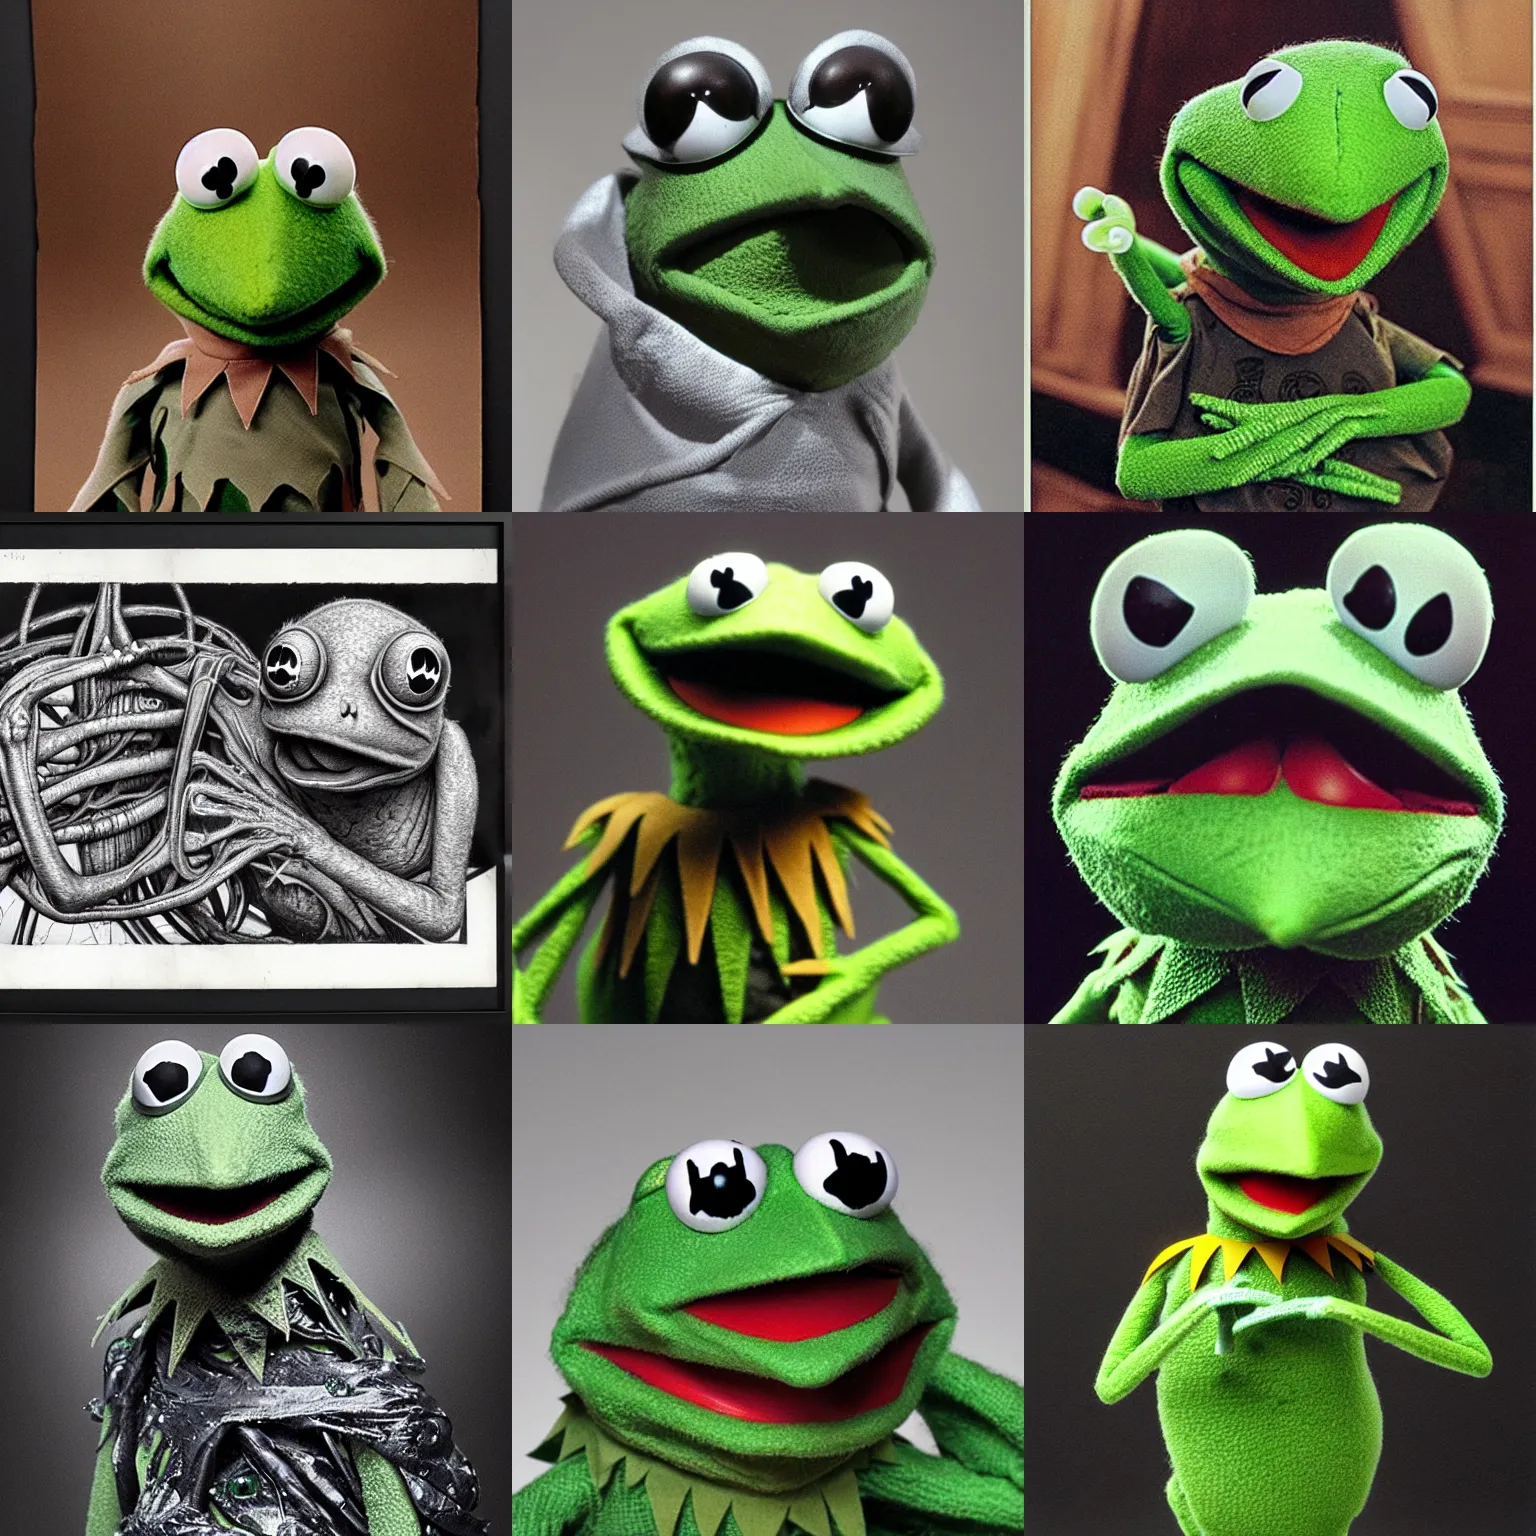 Prompt: kermit the frog designed by h. r. giger